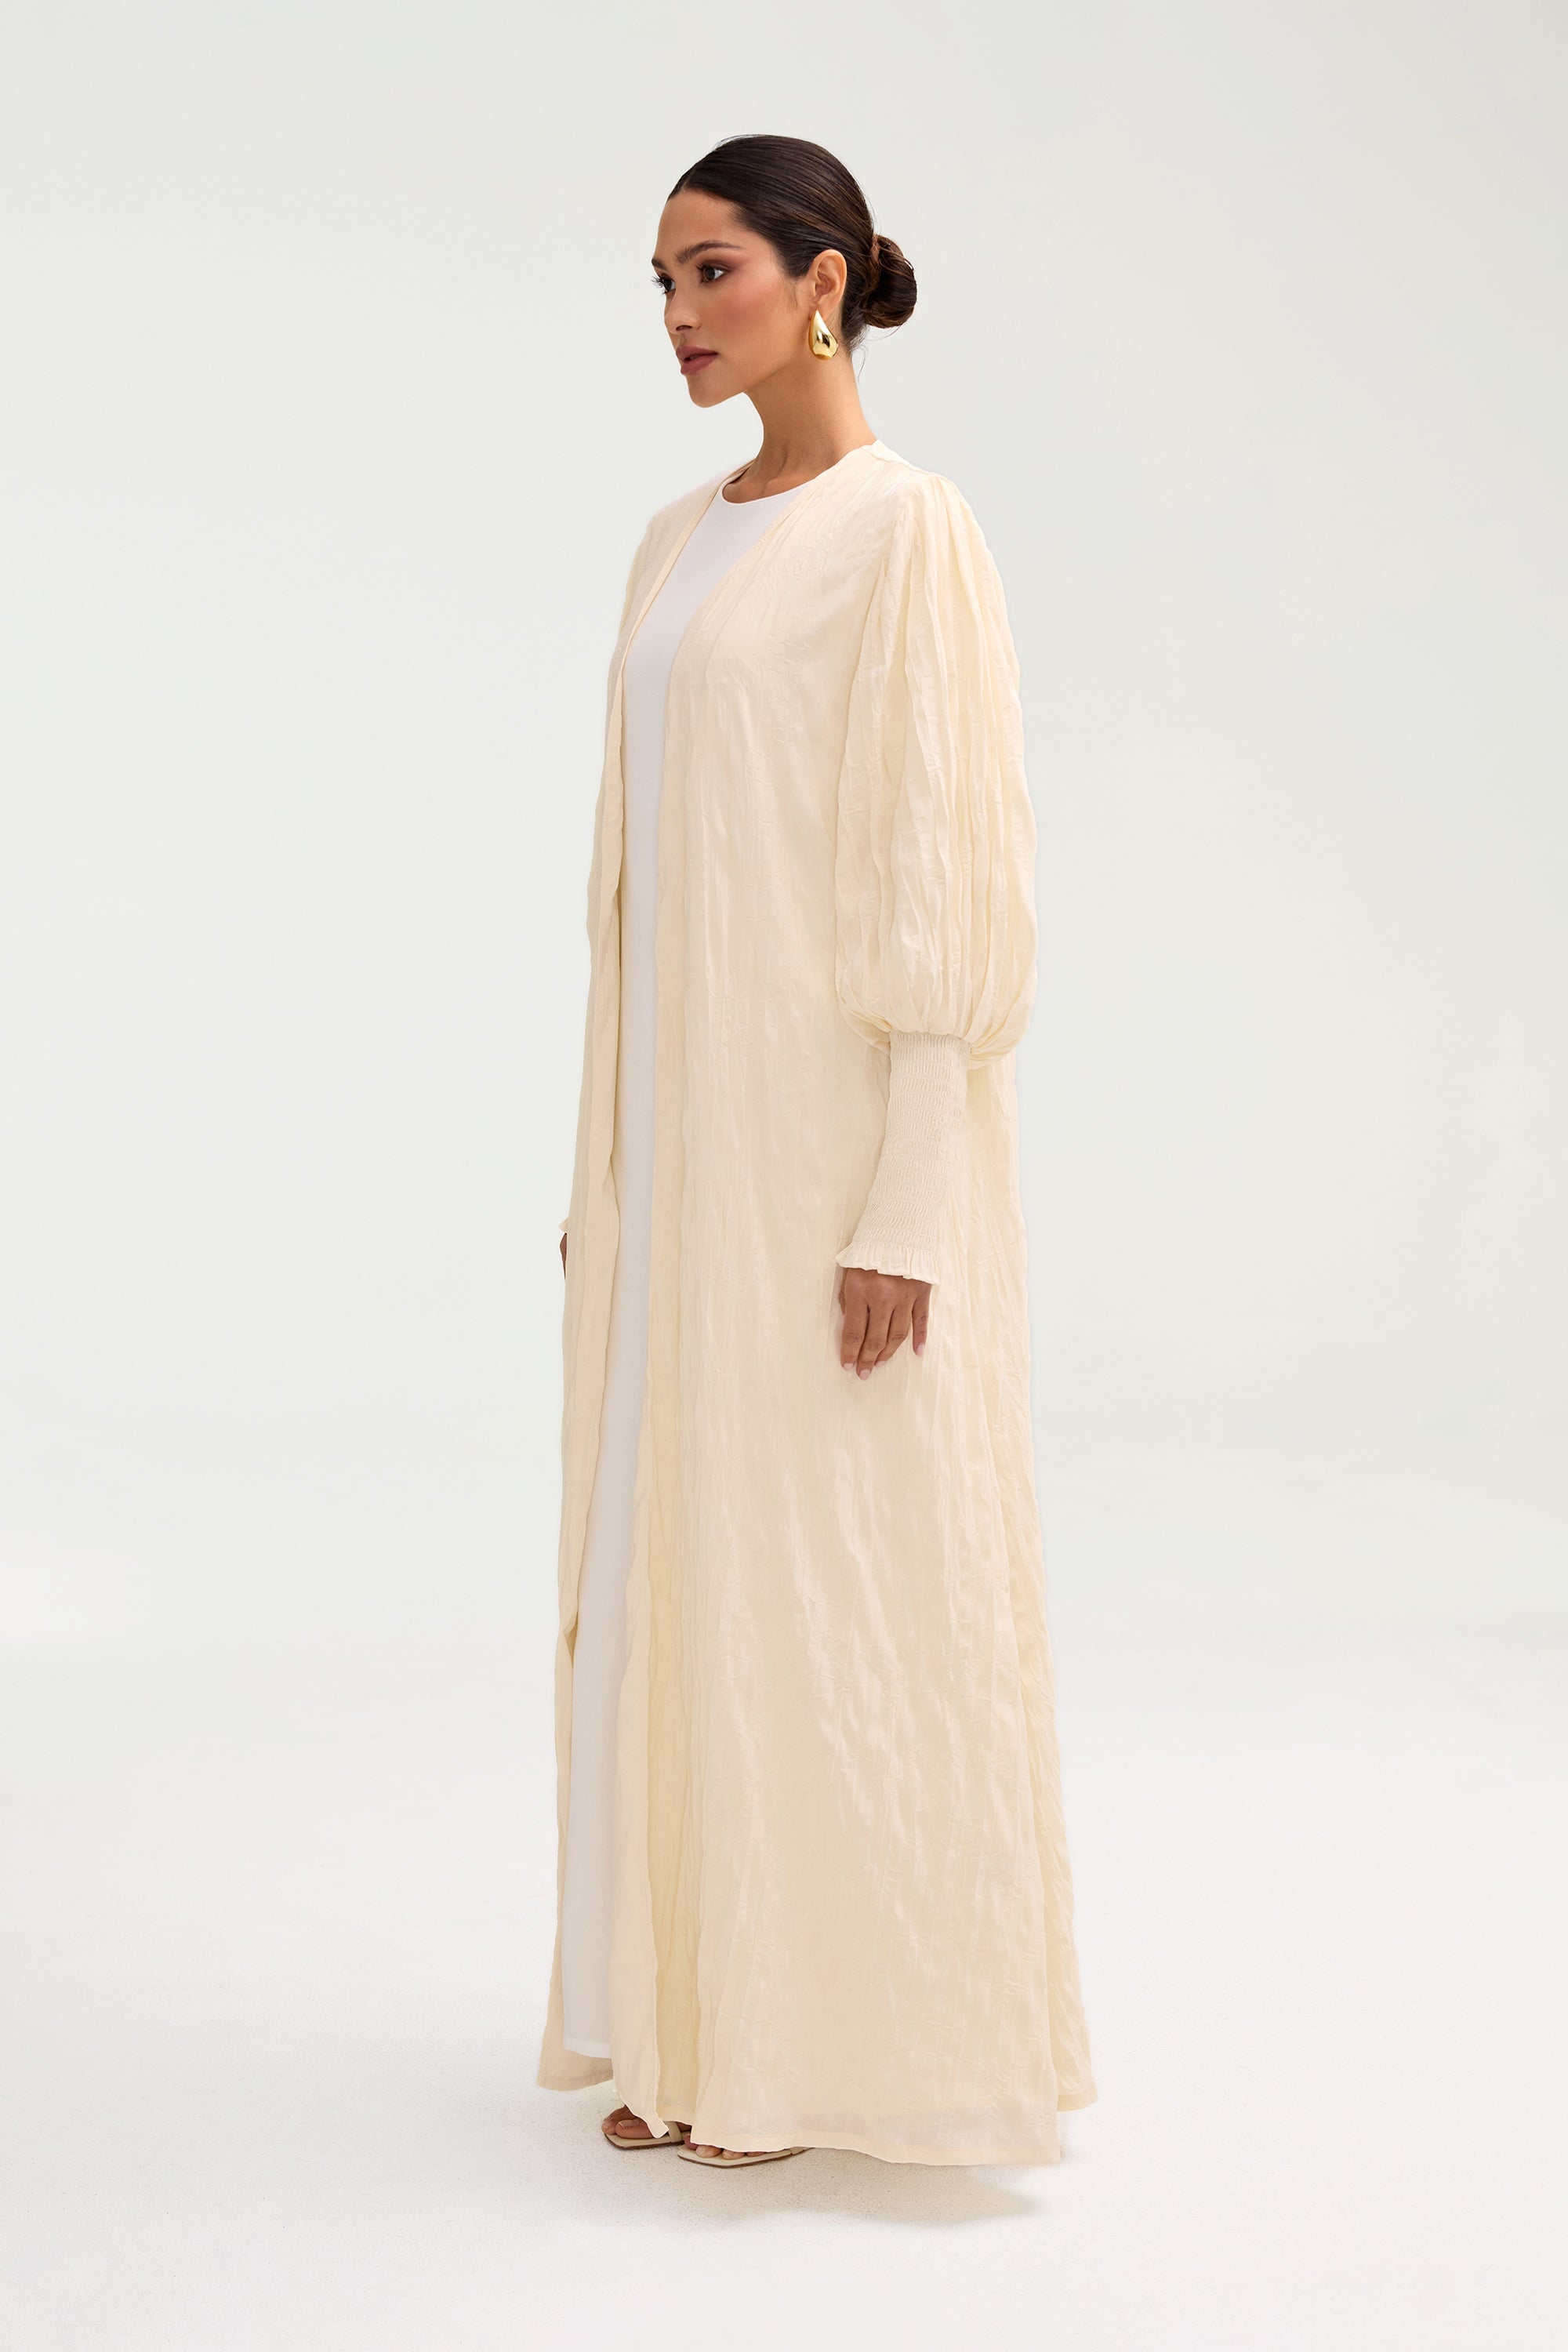 Deena Open Abaya - Coconut Clothing Veiled 